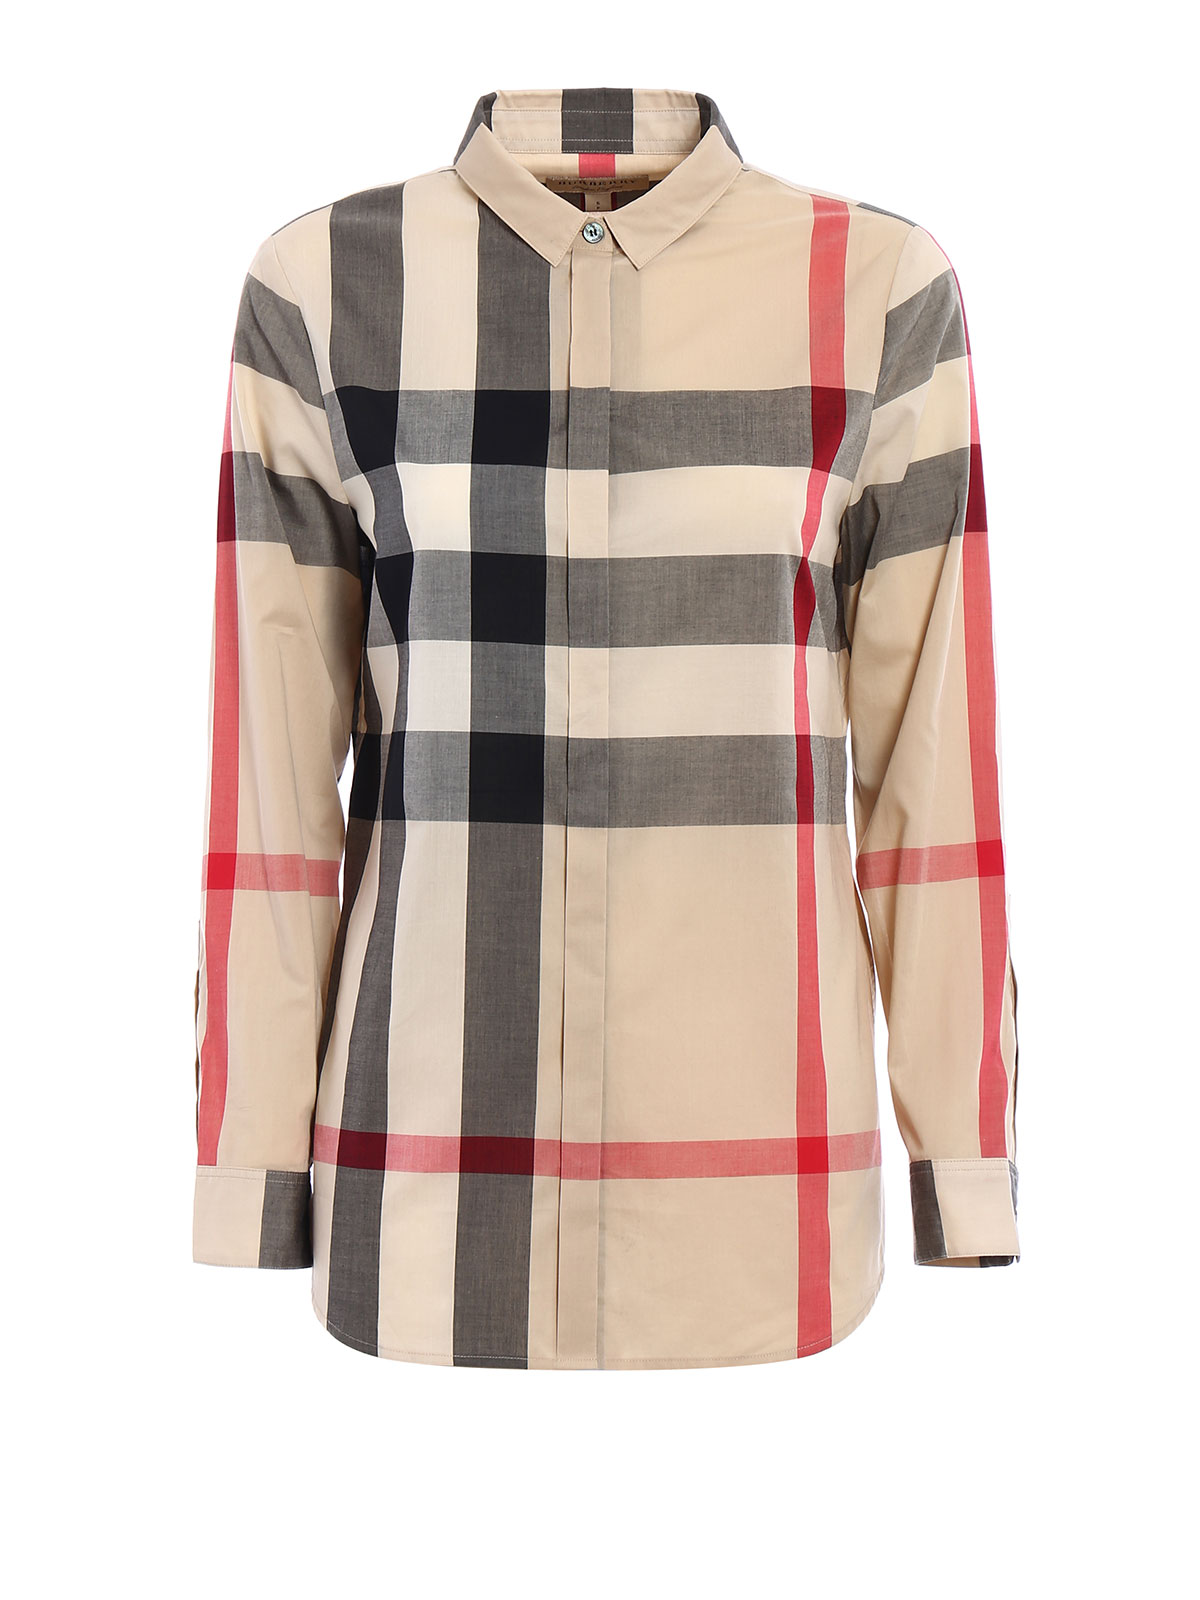 Shirts Burberry - New classic check shirt - 3994090 | Shop online at iKRIX